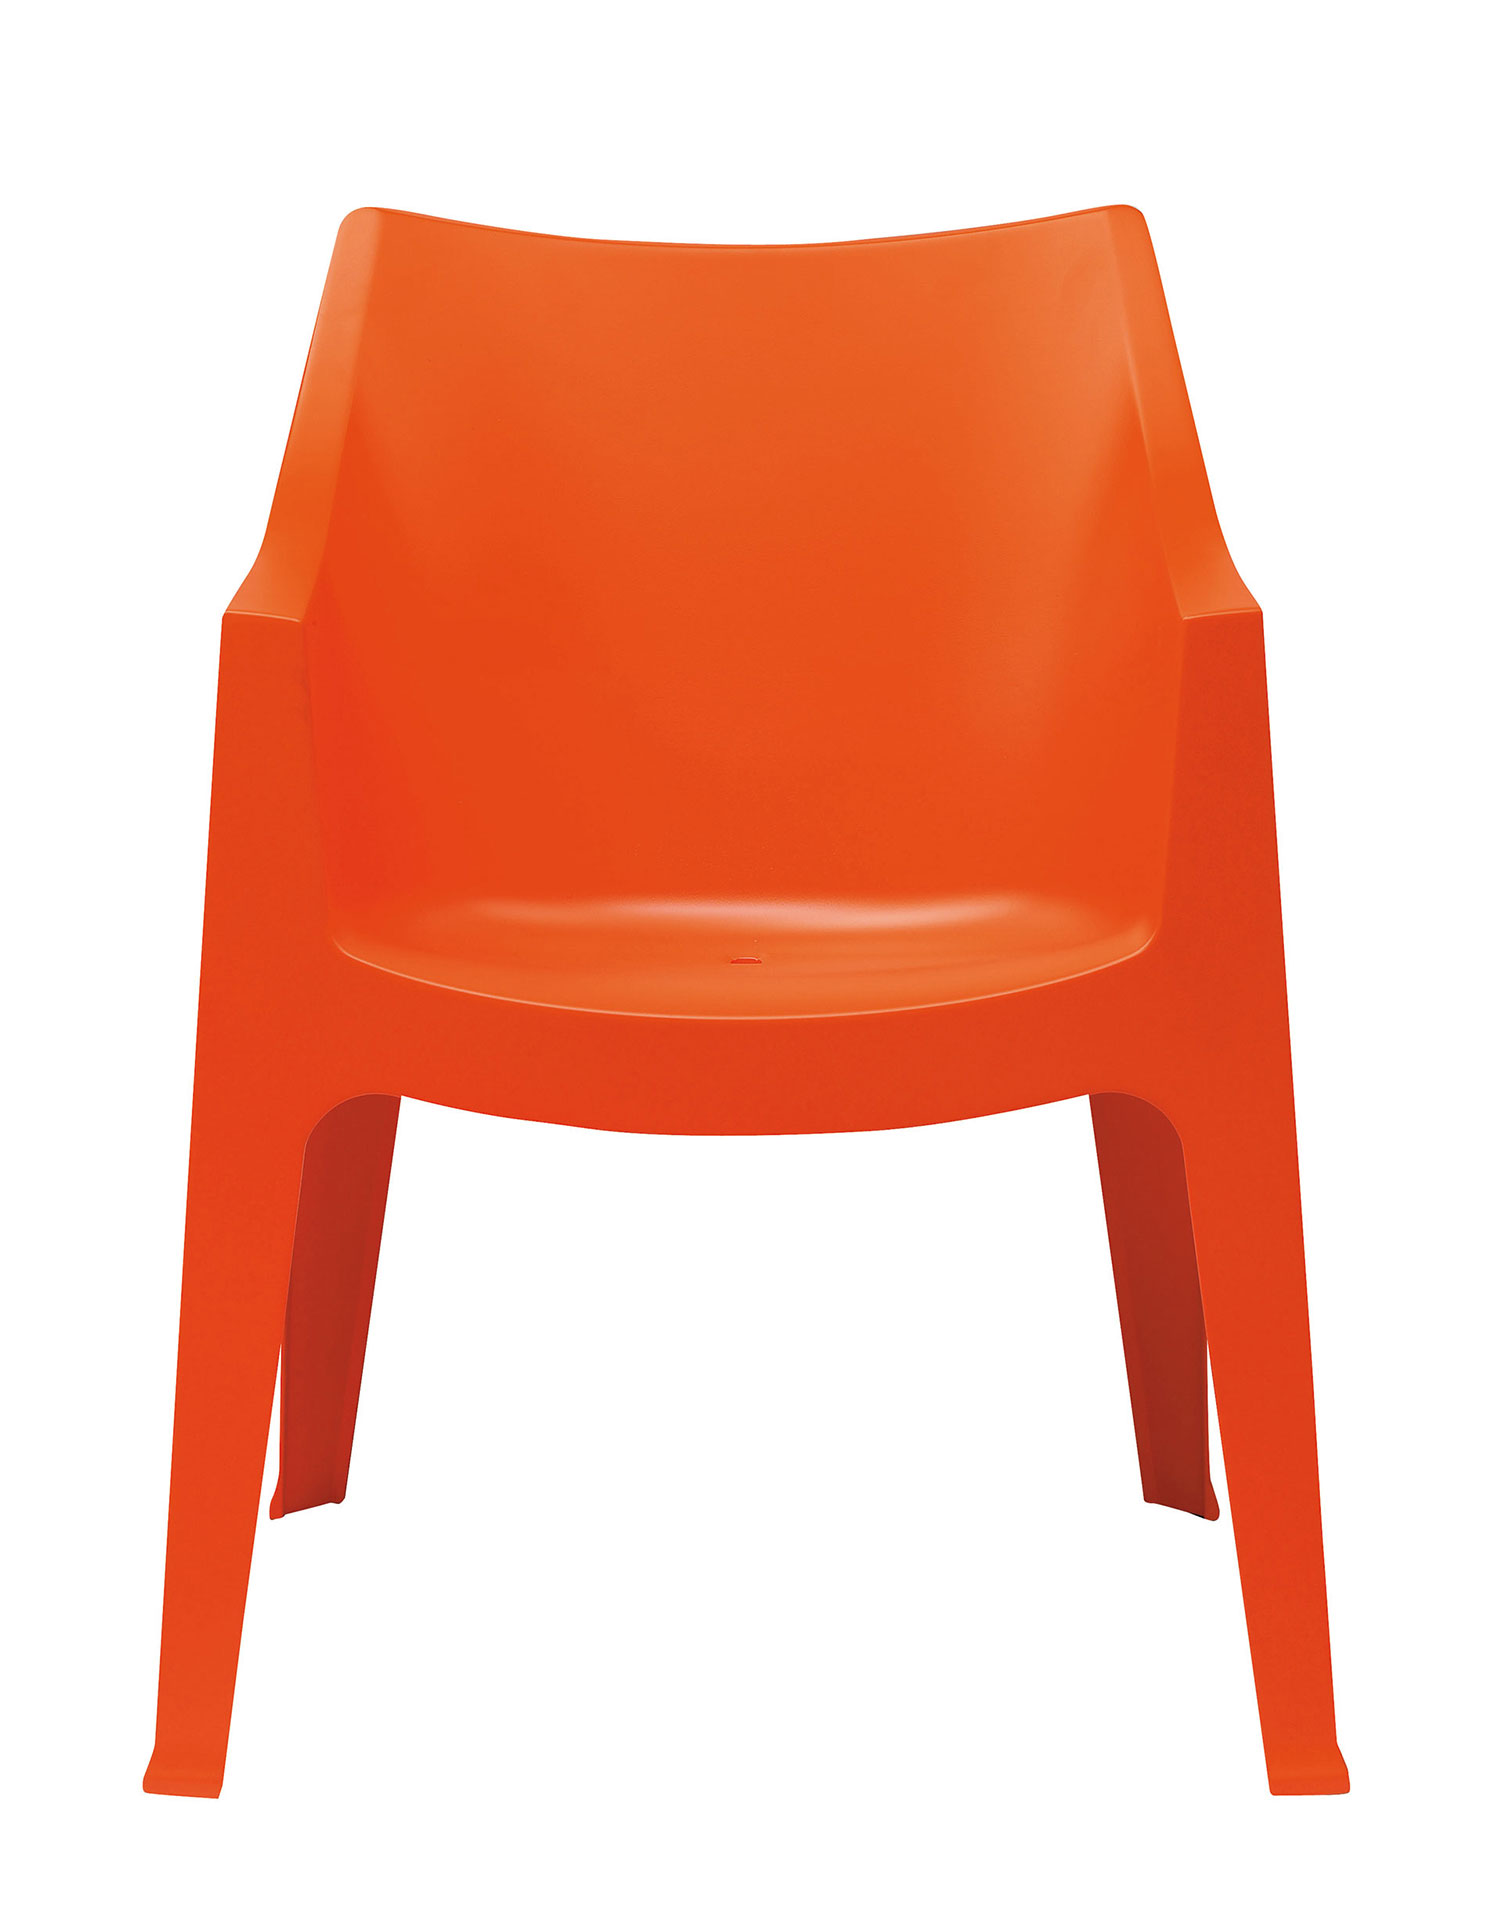 COCCOLONA Chair